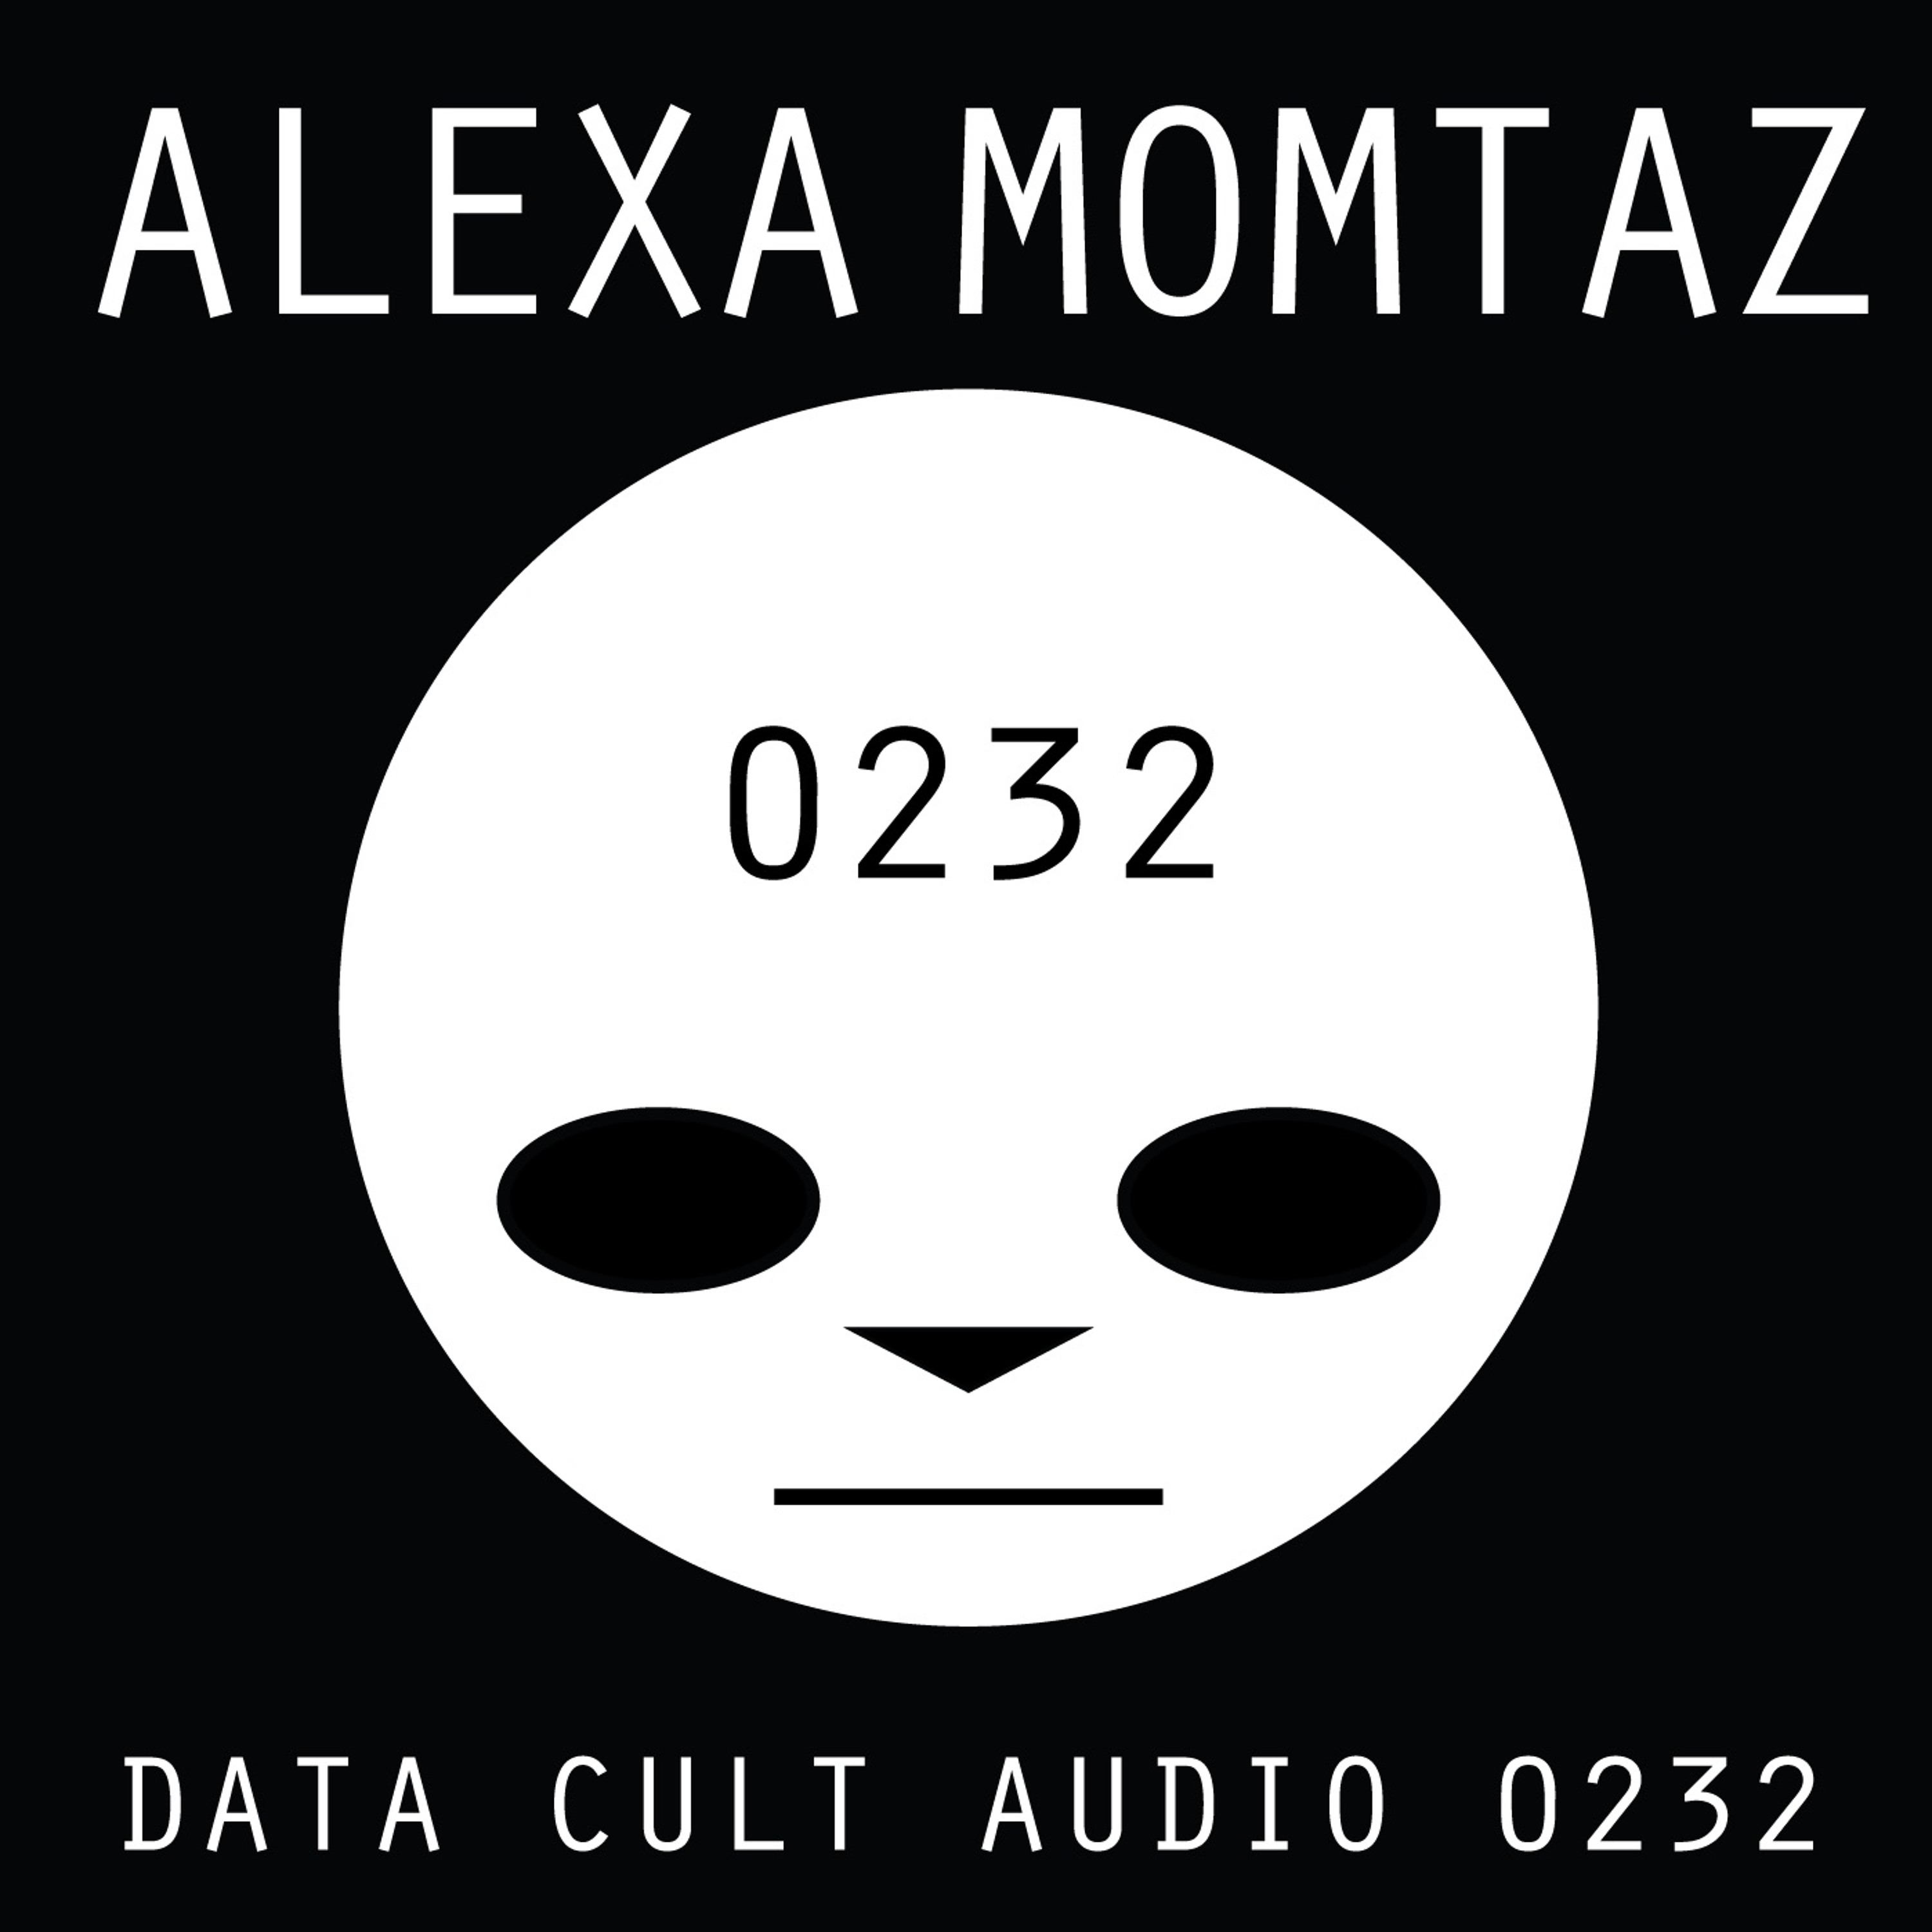 Data Cult Audio 0232 - Alexa Momtaz